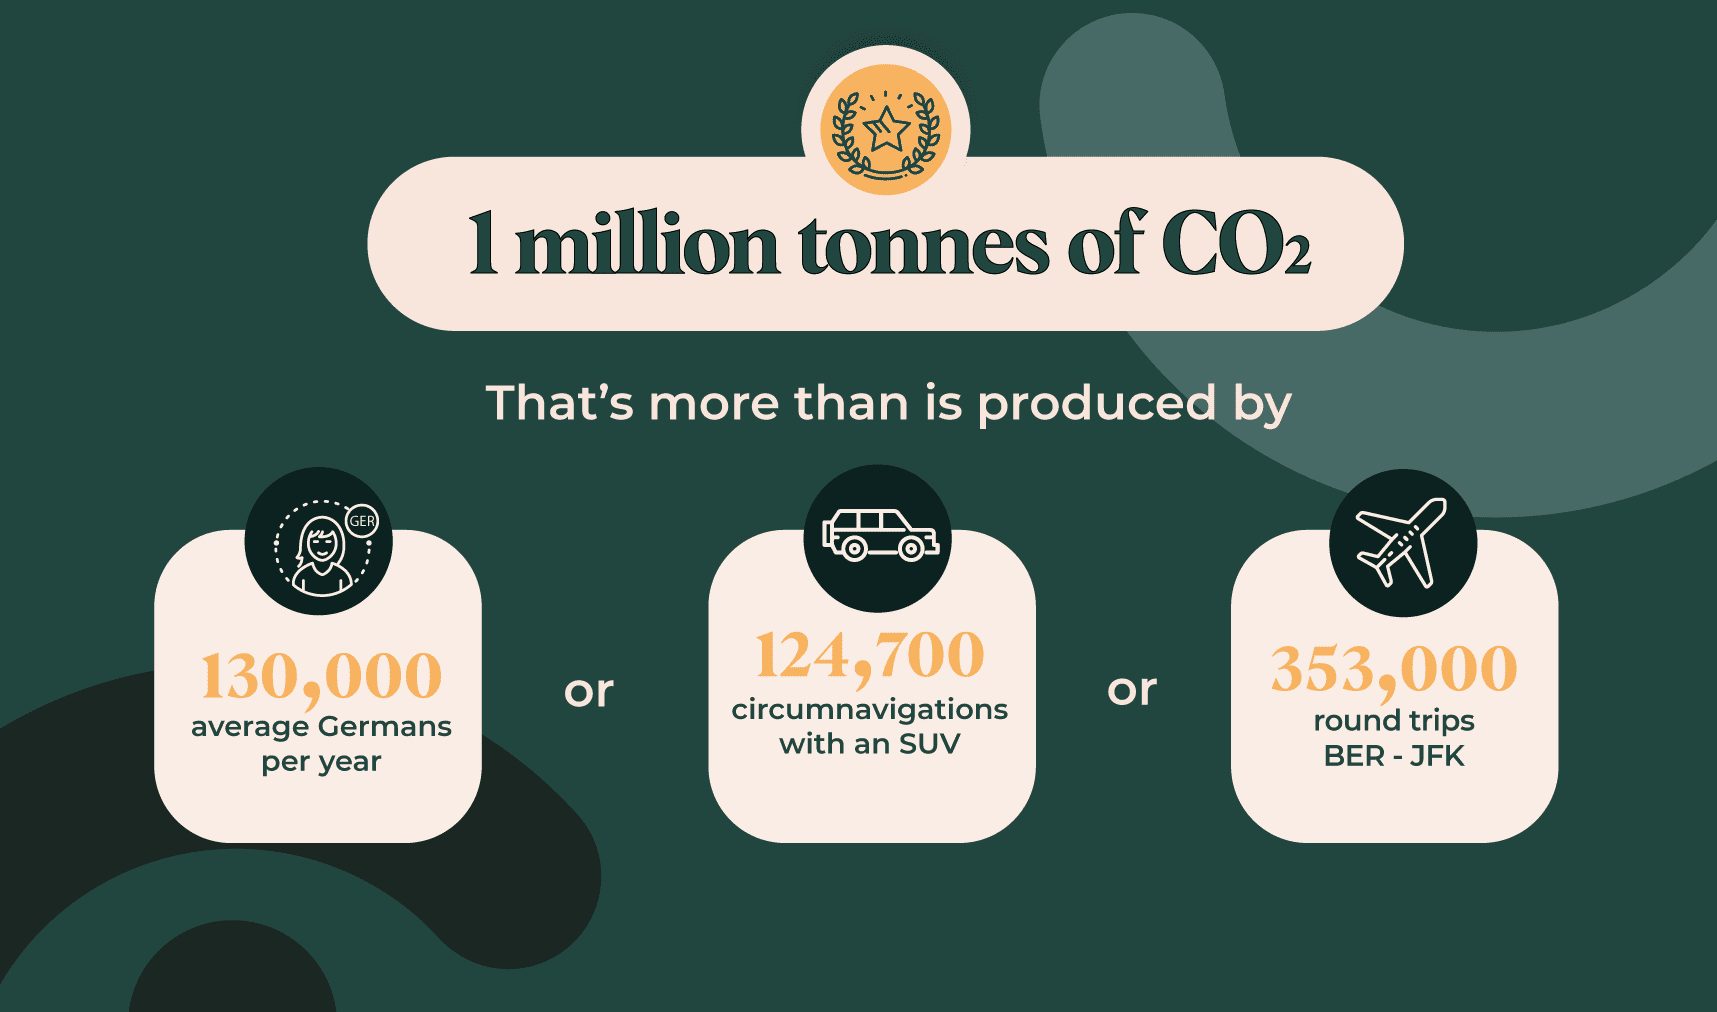 1 million tonnes of CO2 in comparison